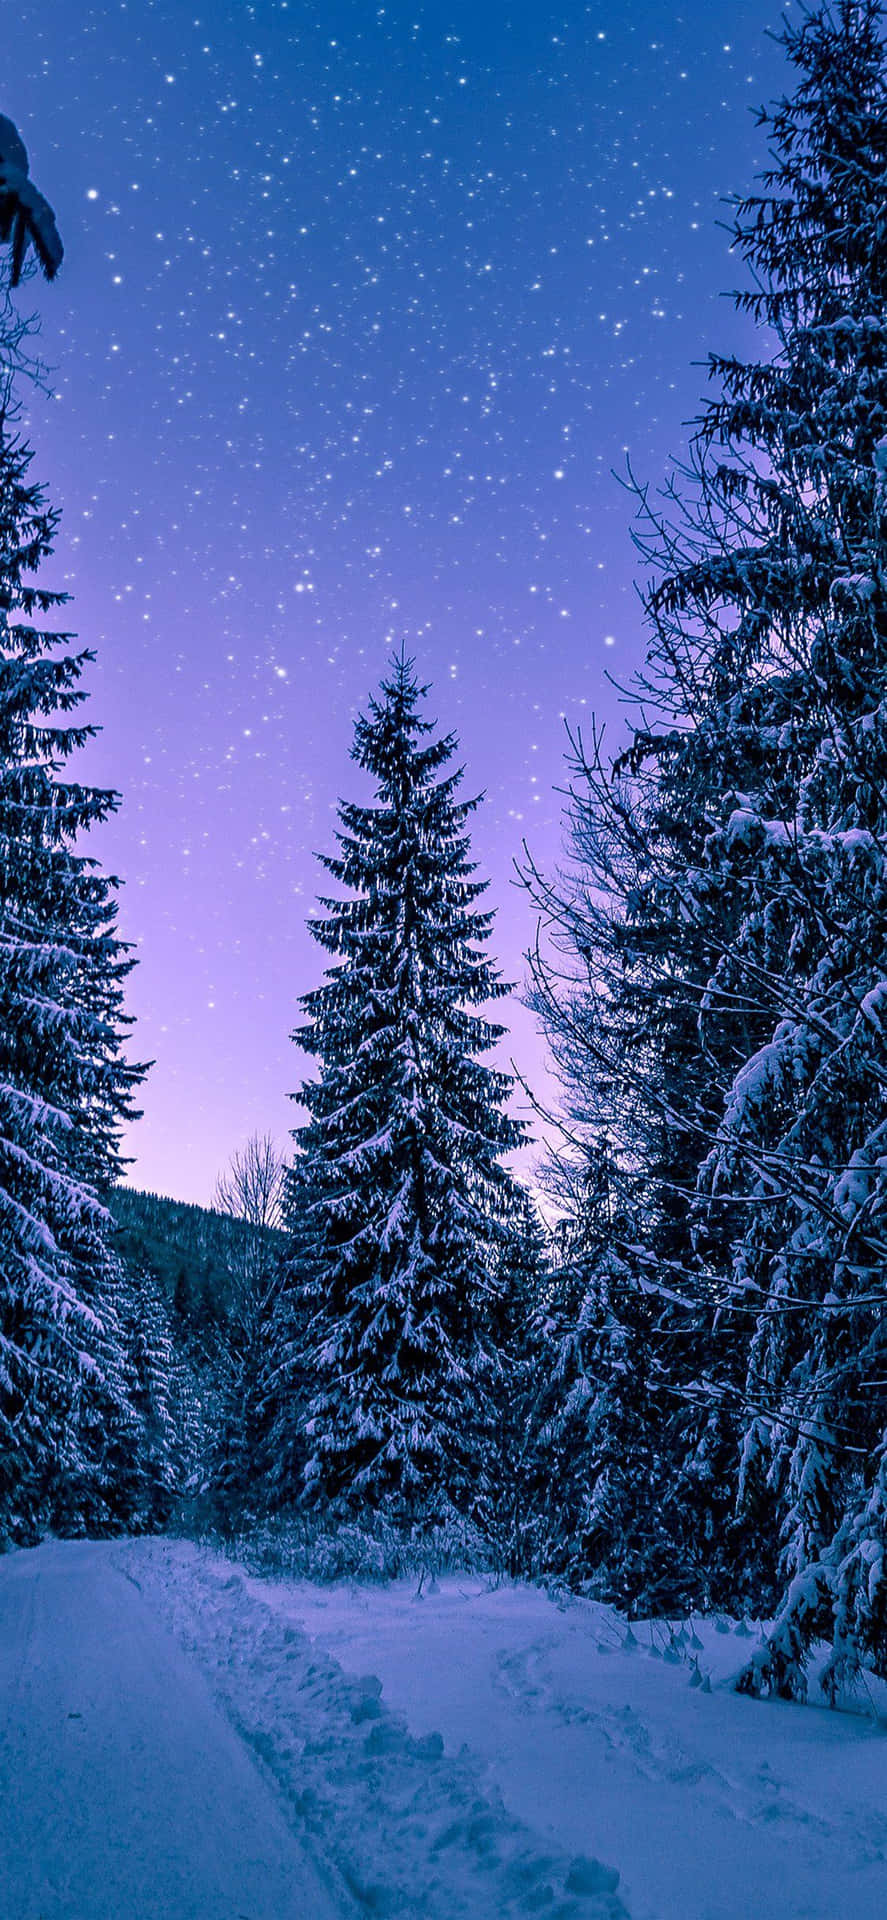 Starry Sky In Winter Snow iPhone Wallpaper